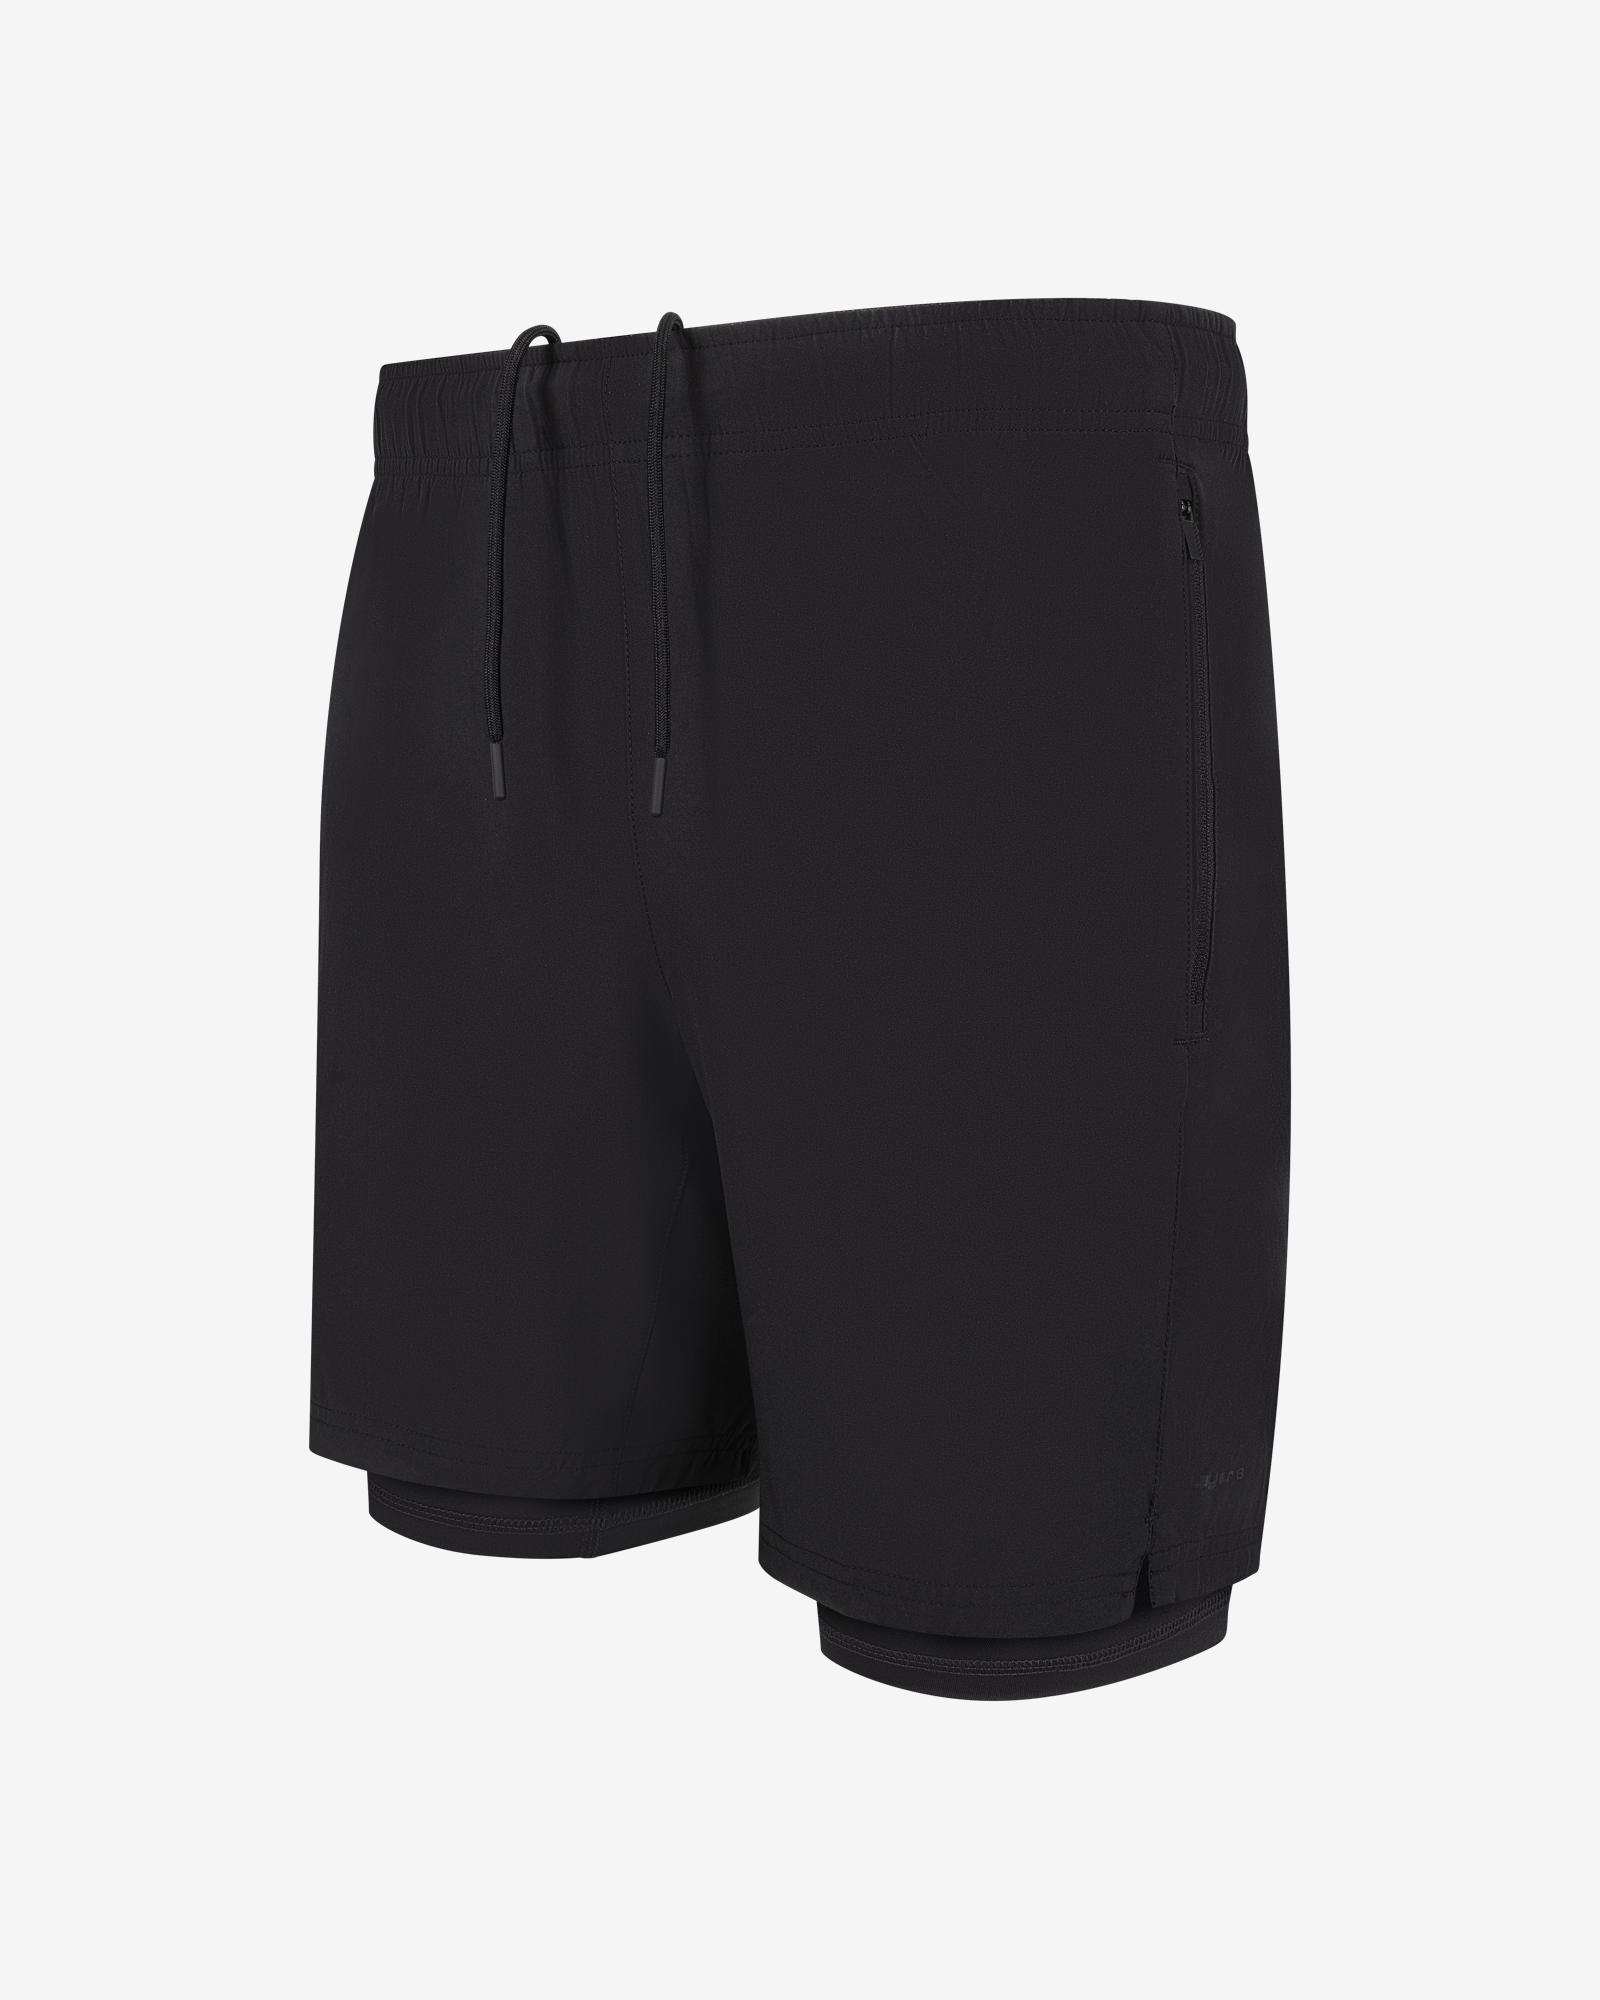 Under Skirt Shorts, Tango Workout Short Shorts, Elastic Fit Shorts